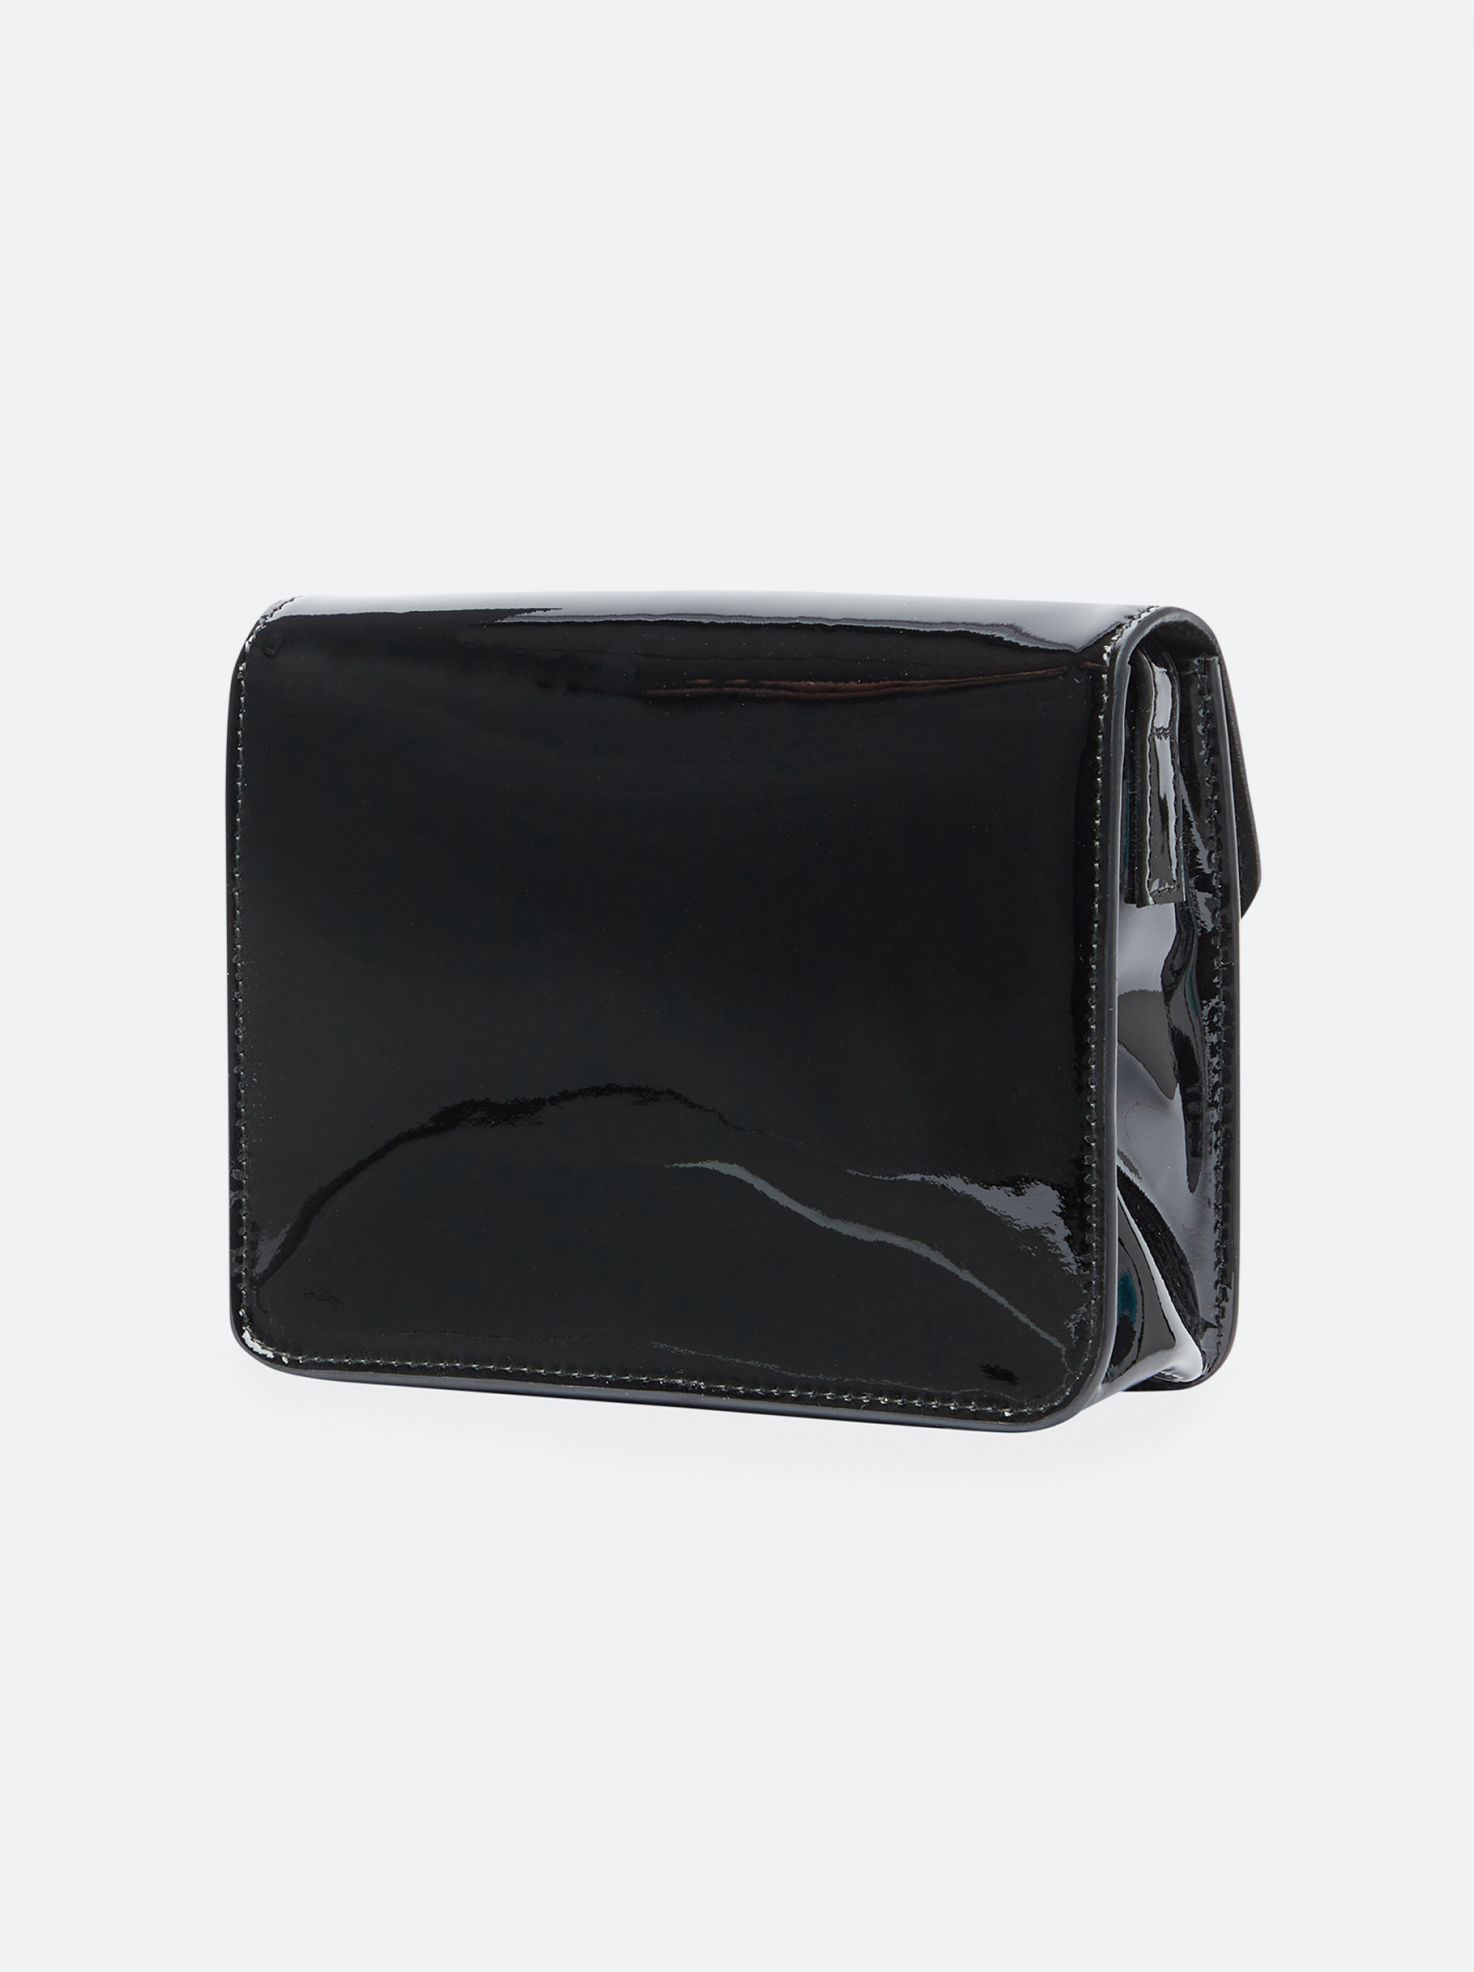 Garay Small Clutch Purse Patent Leather Black Look Vinyl | eBay